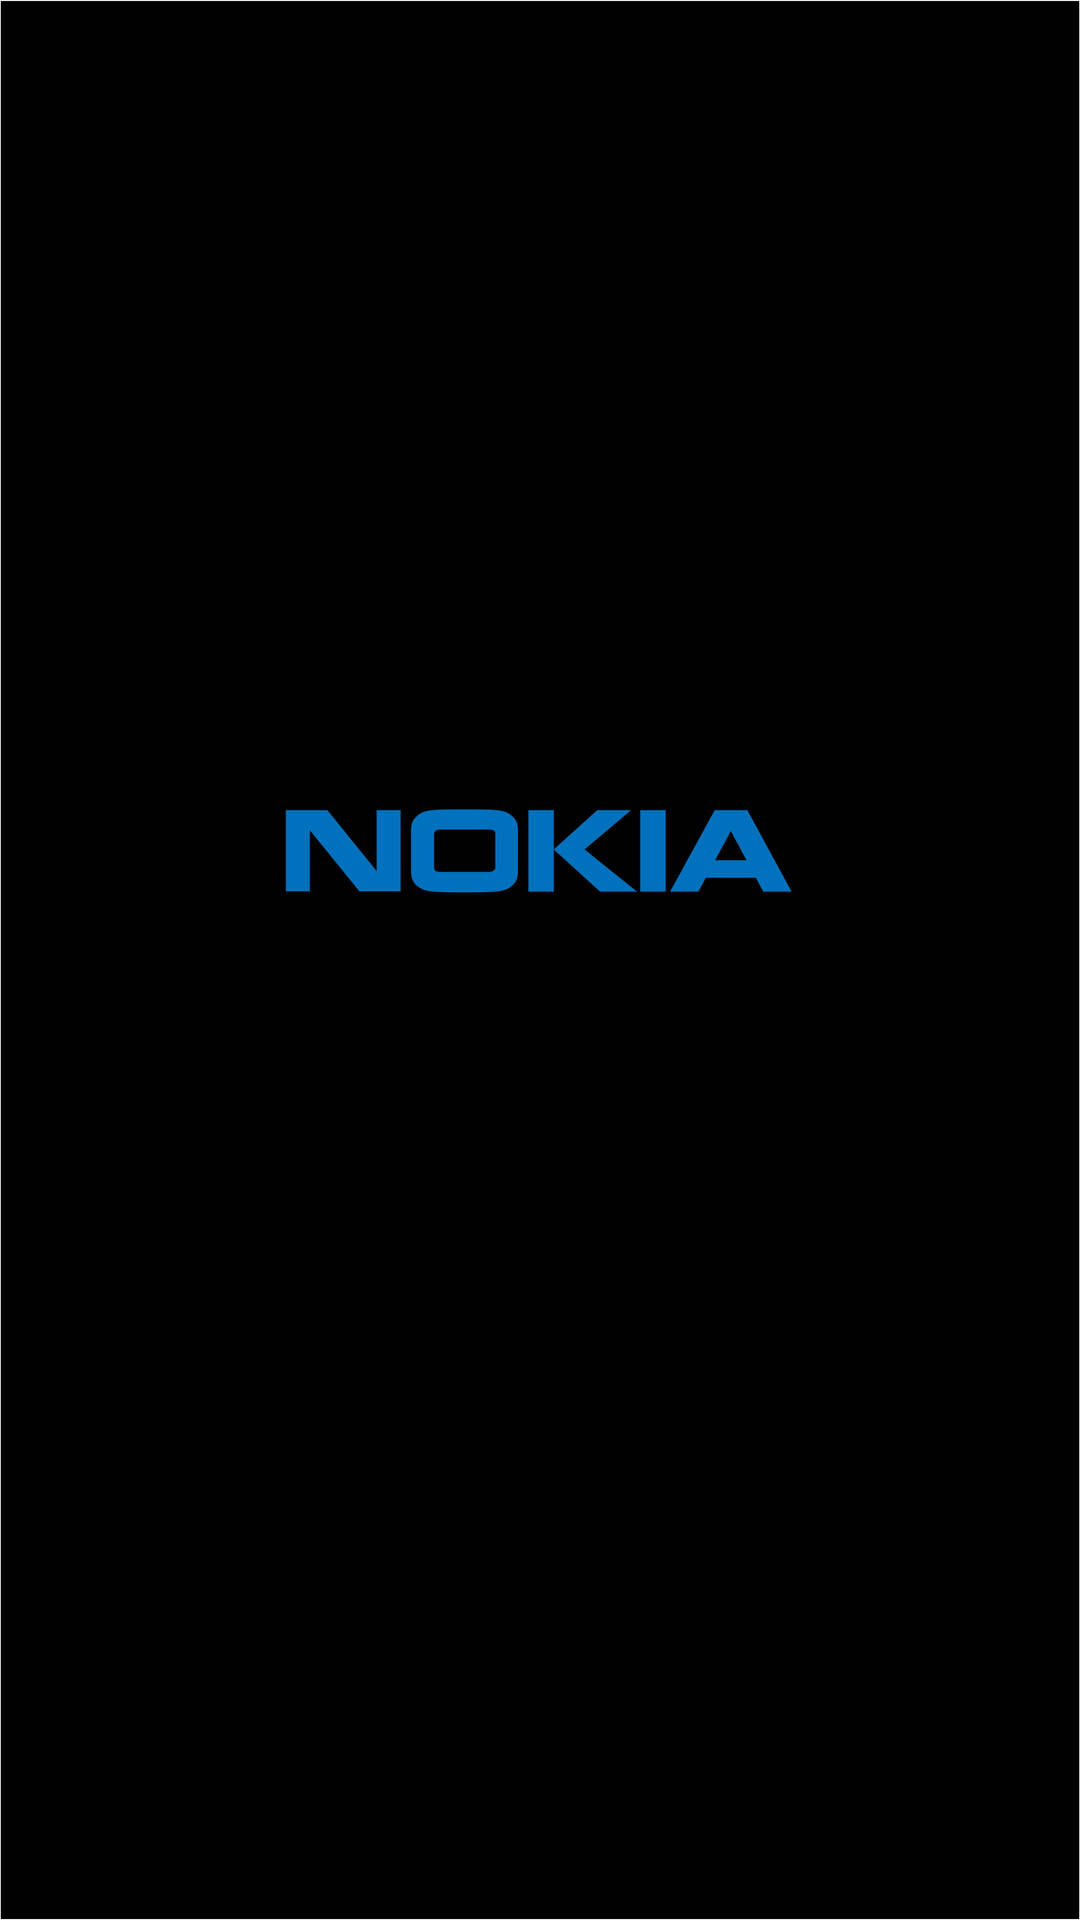 Nokia Wordmark Logo 8K Phone Wallpaper